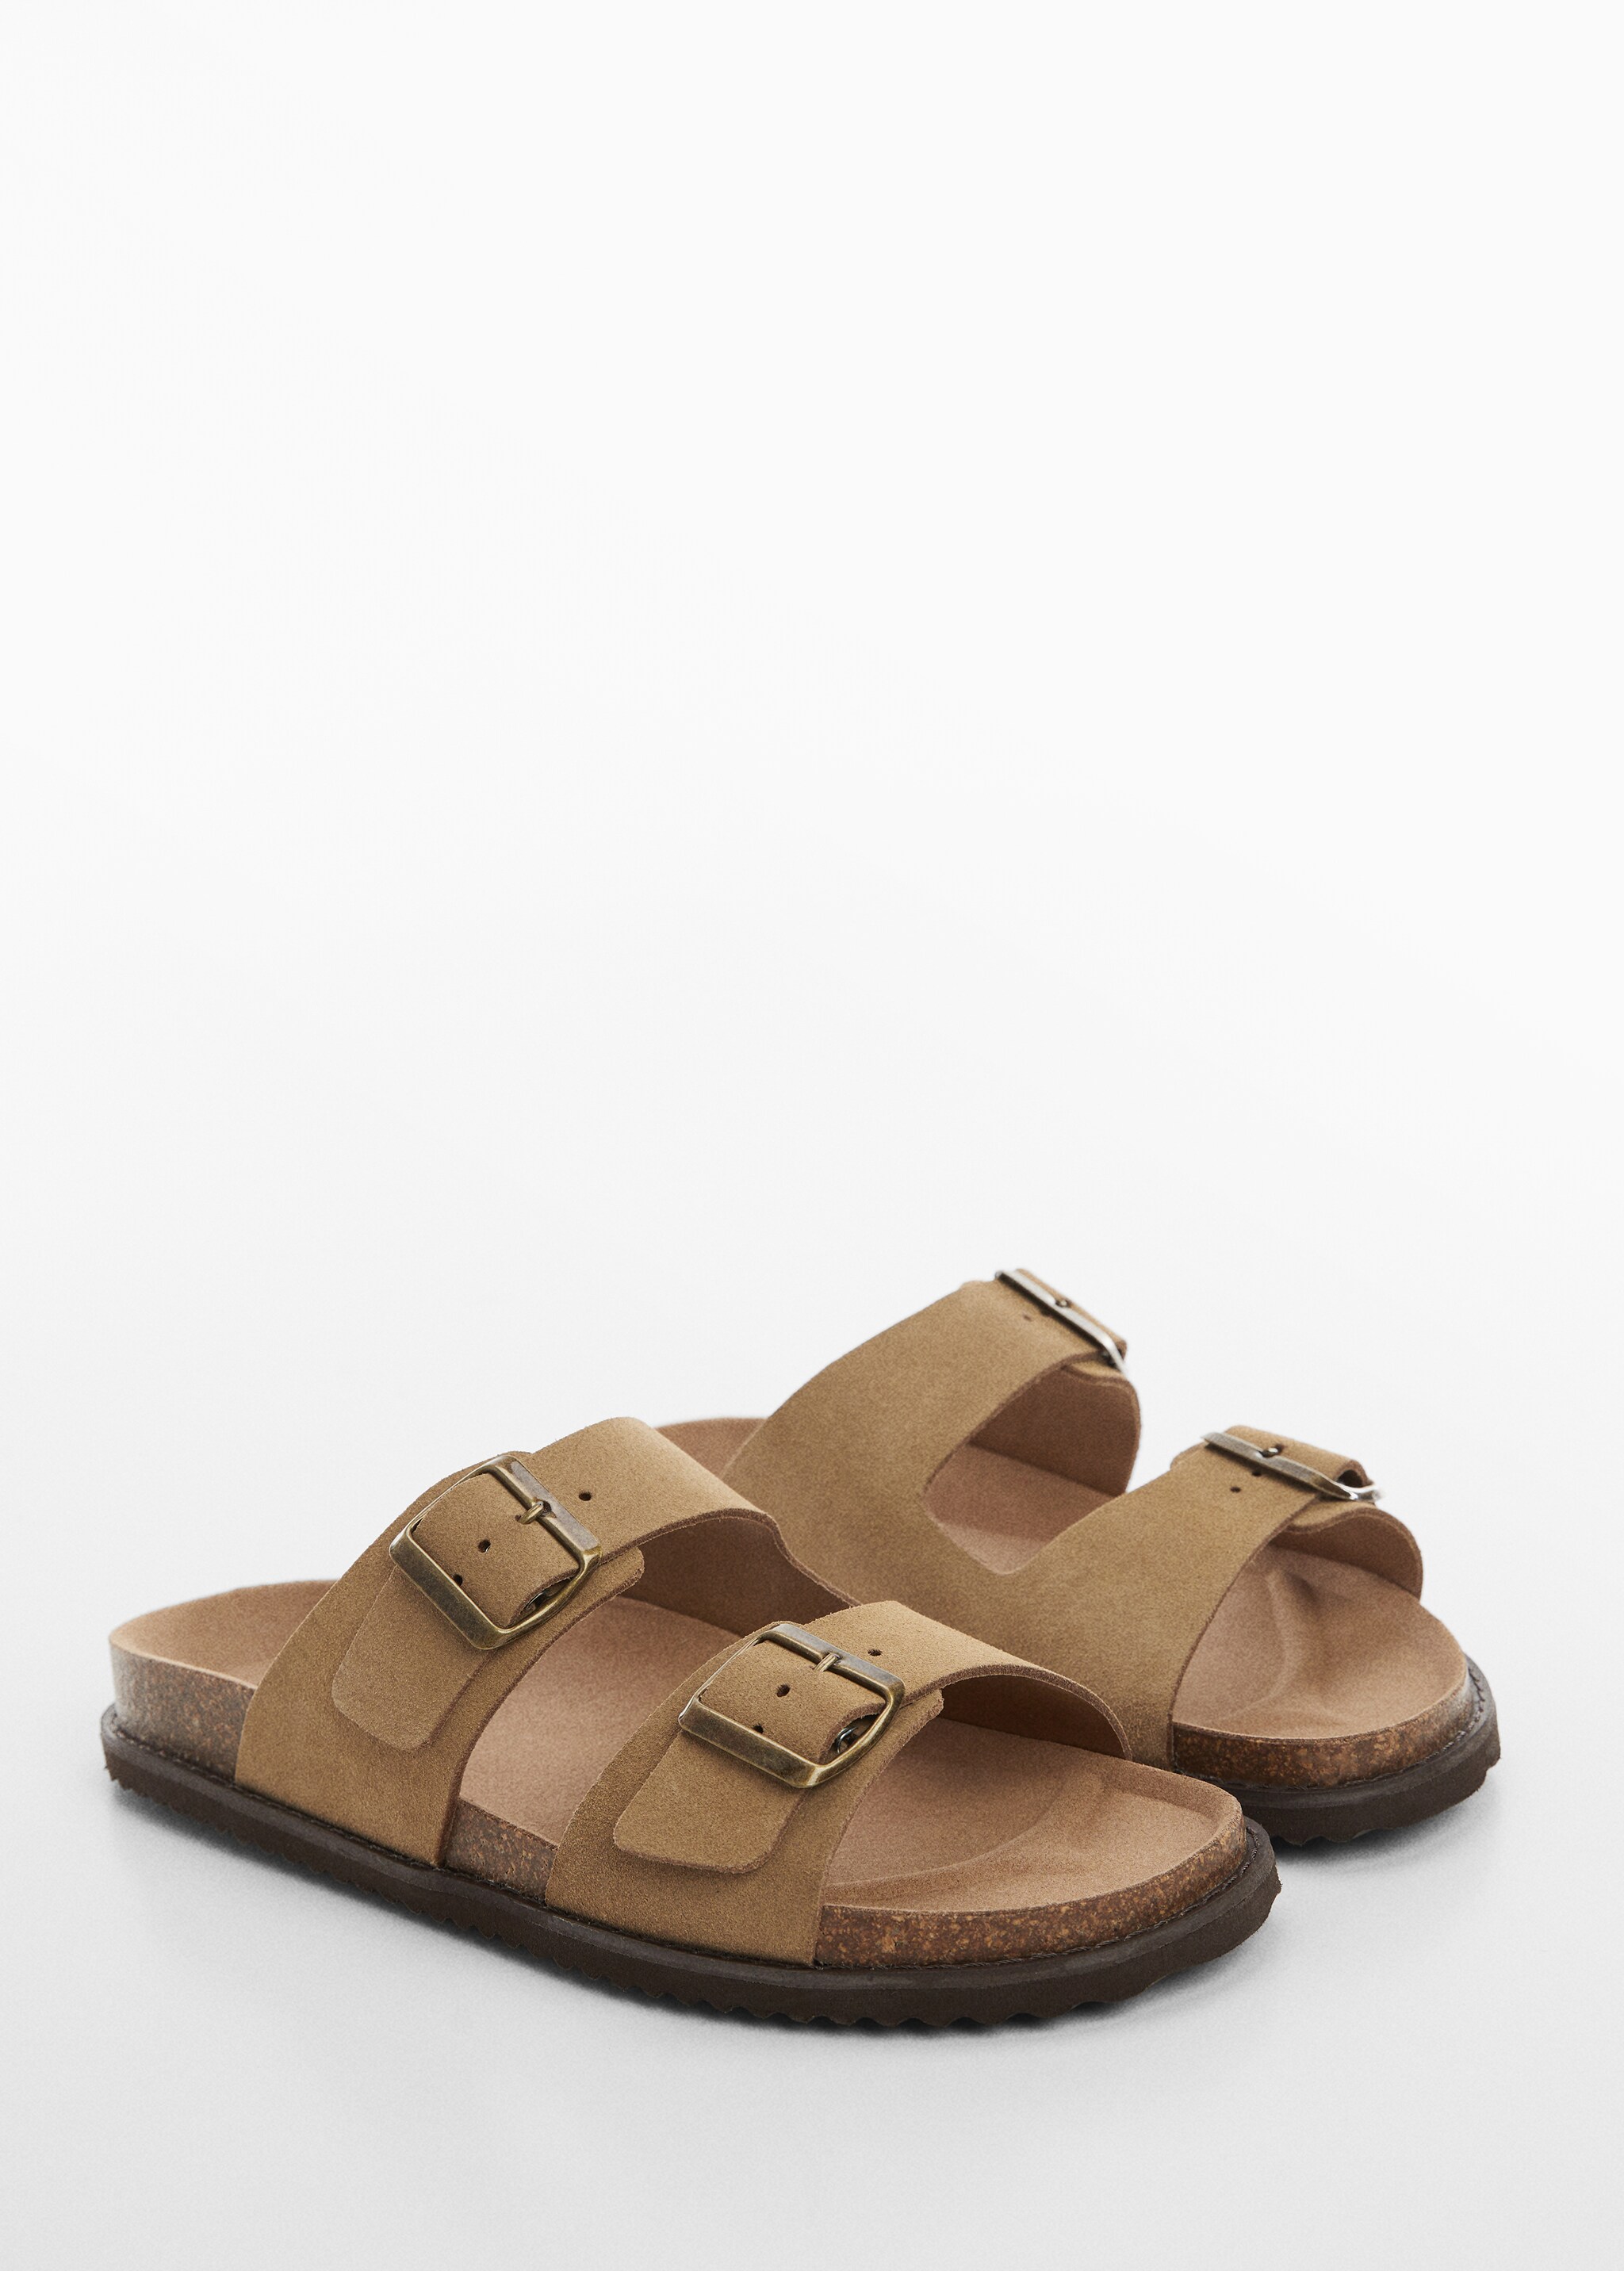 Split leather sandals with buckle - Medium plane